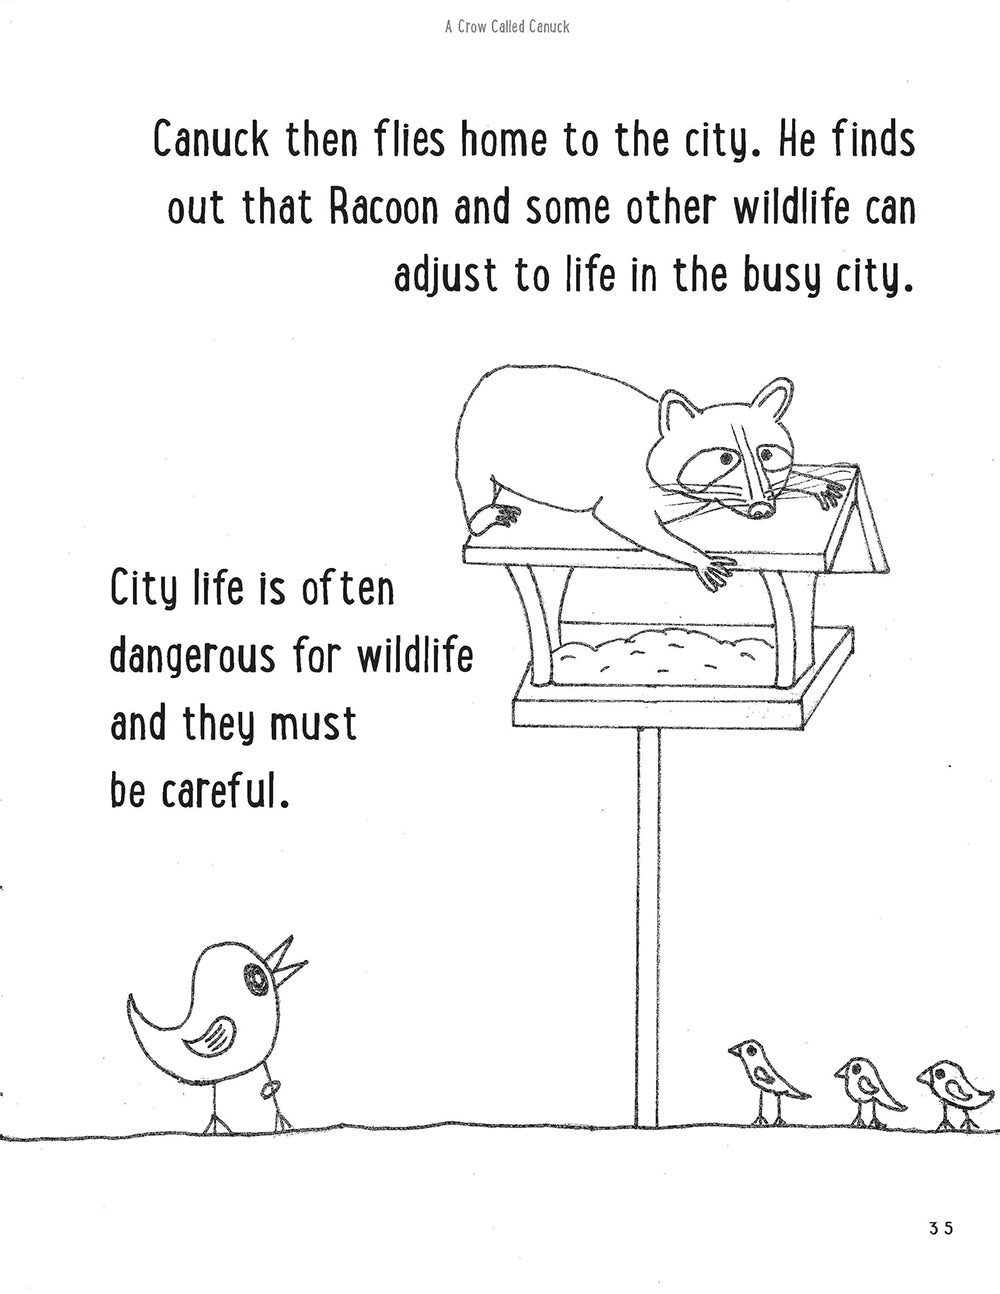 A Crow Called Canuck: a children's activity book